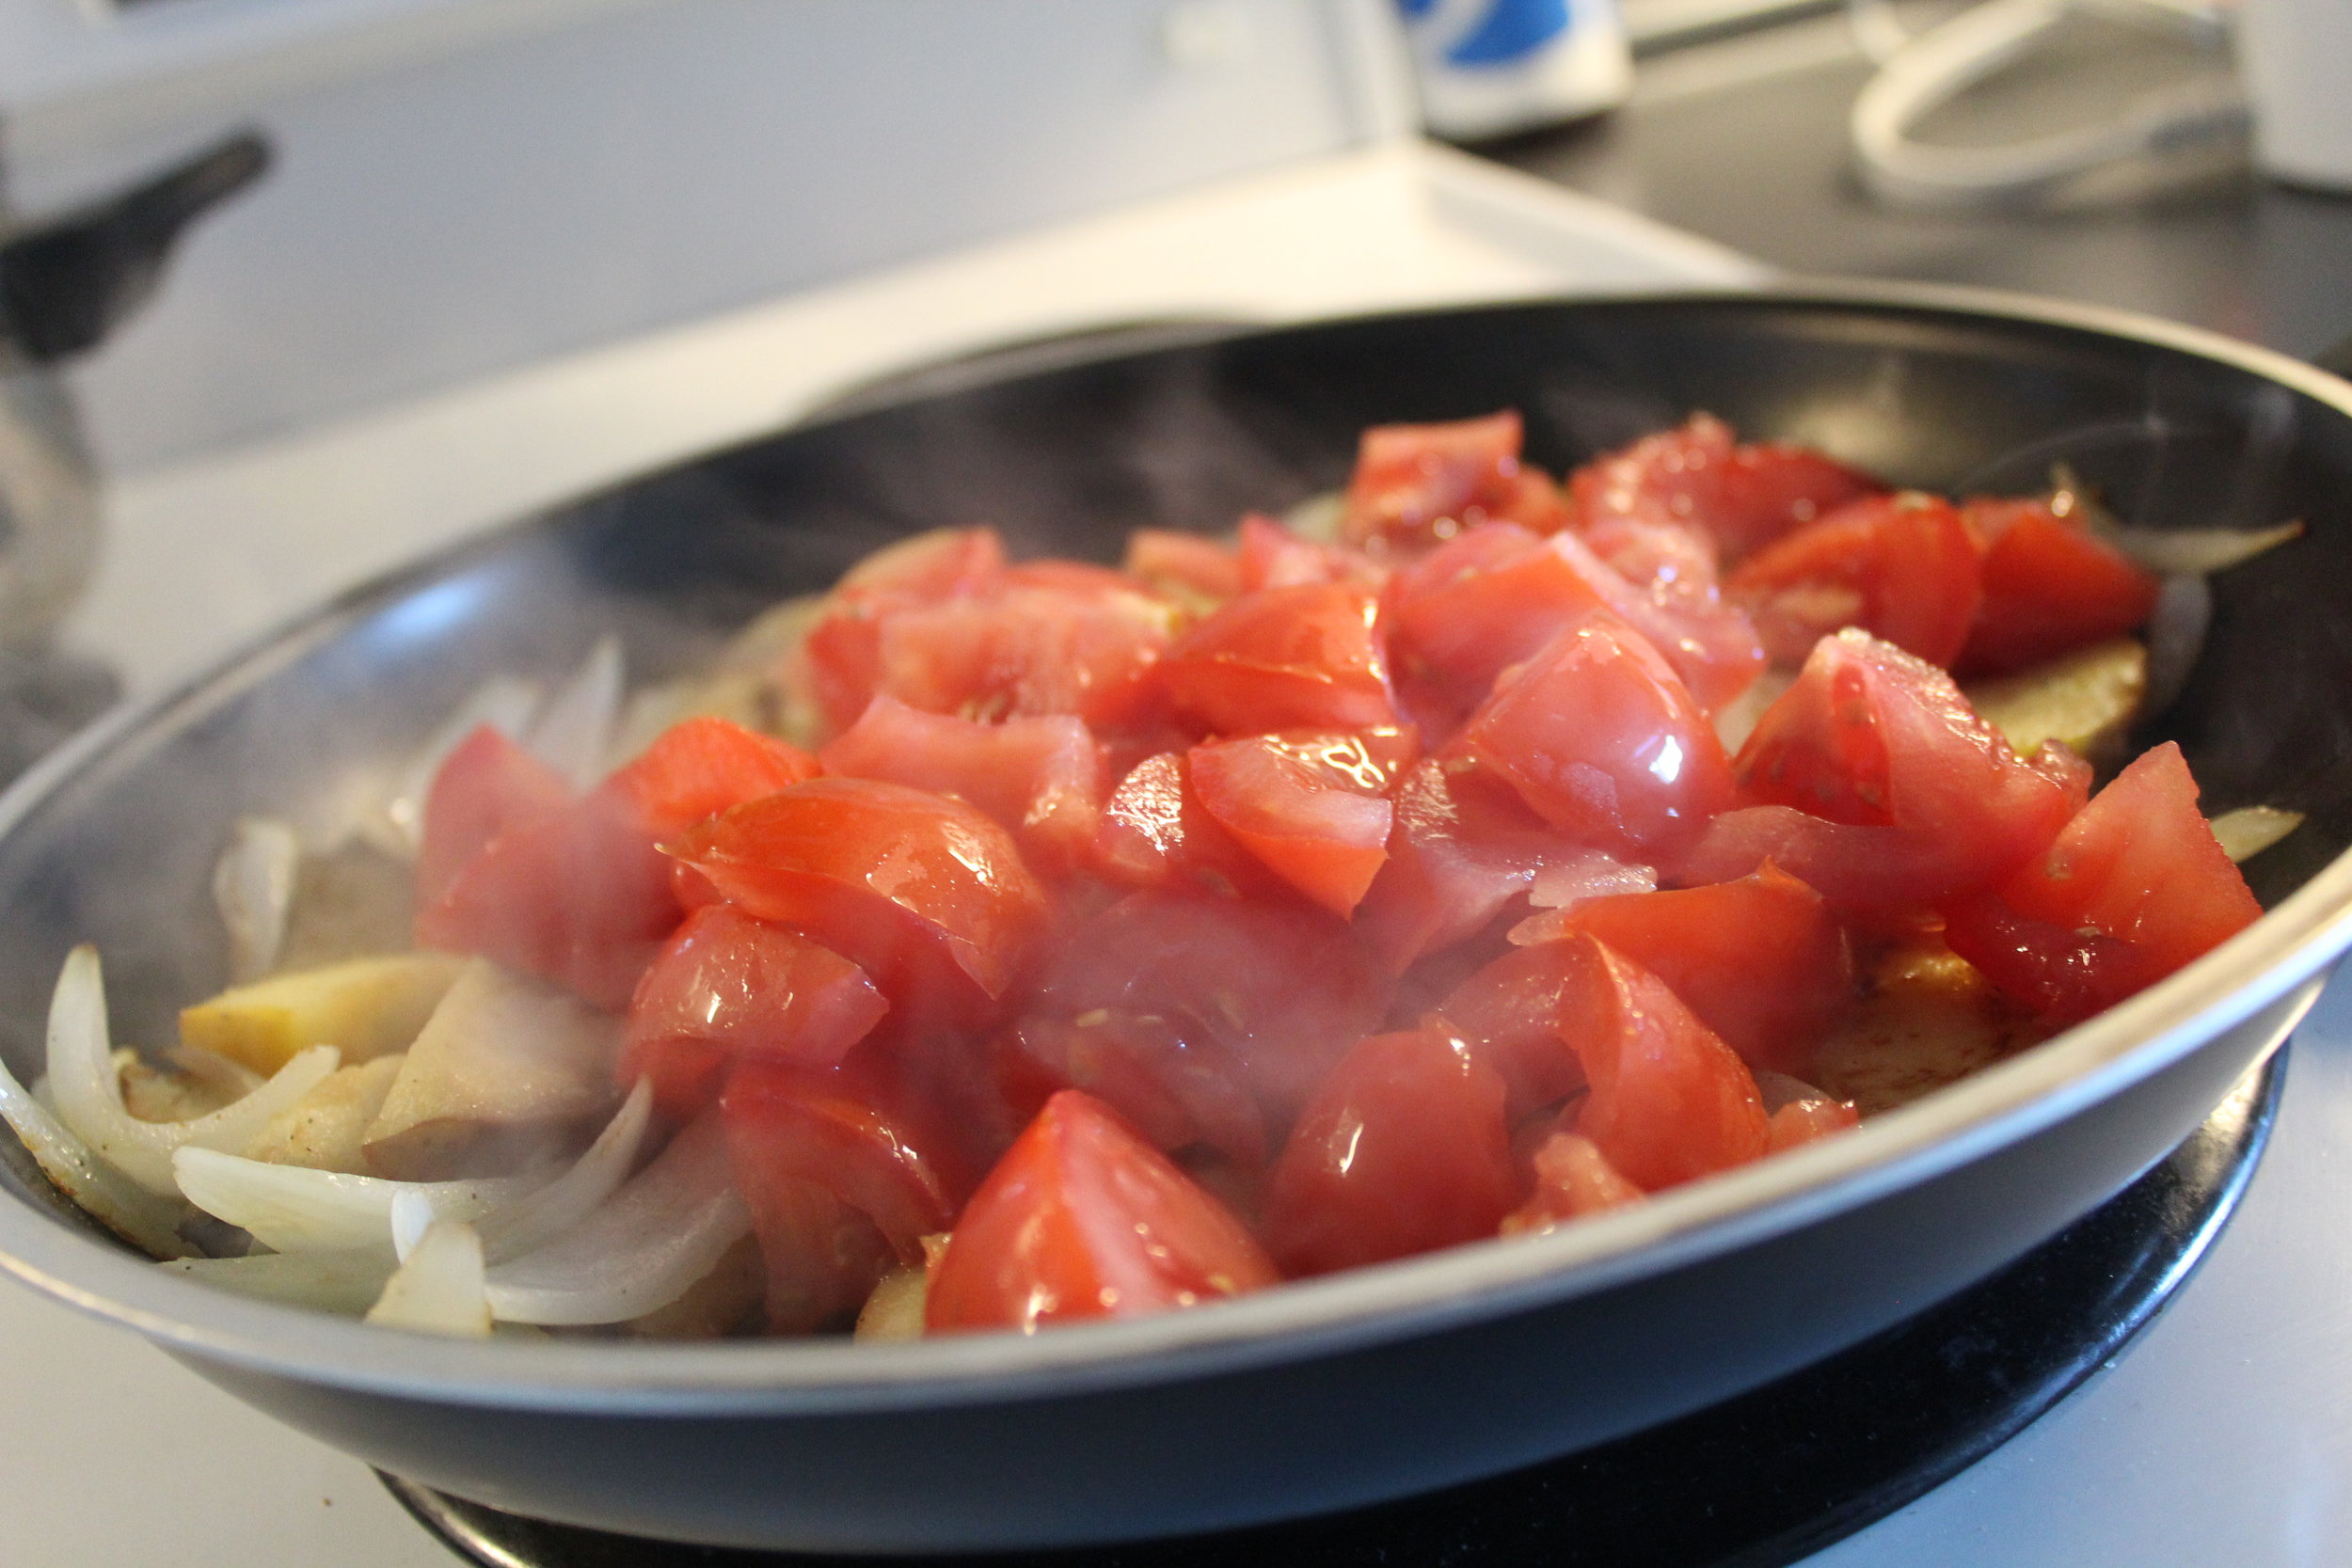 Add the tomatoes and leave the low heat to do its magic.  بنضيف البندورة وبنترك النار الهادية تعمل شغلها